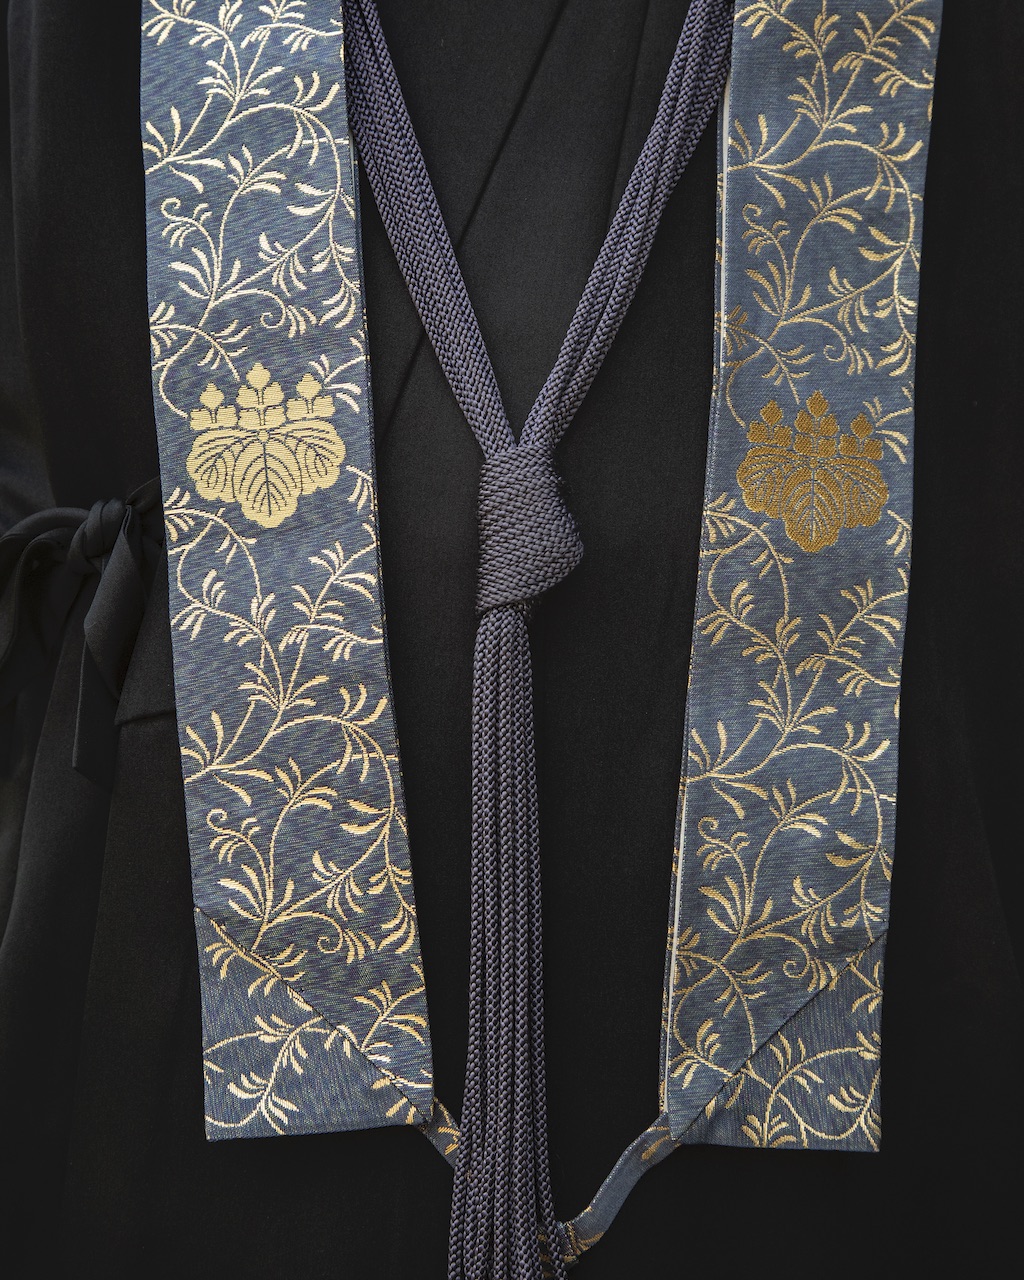 Osaka robe details